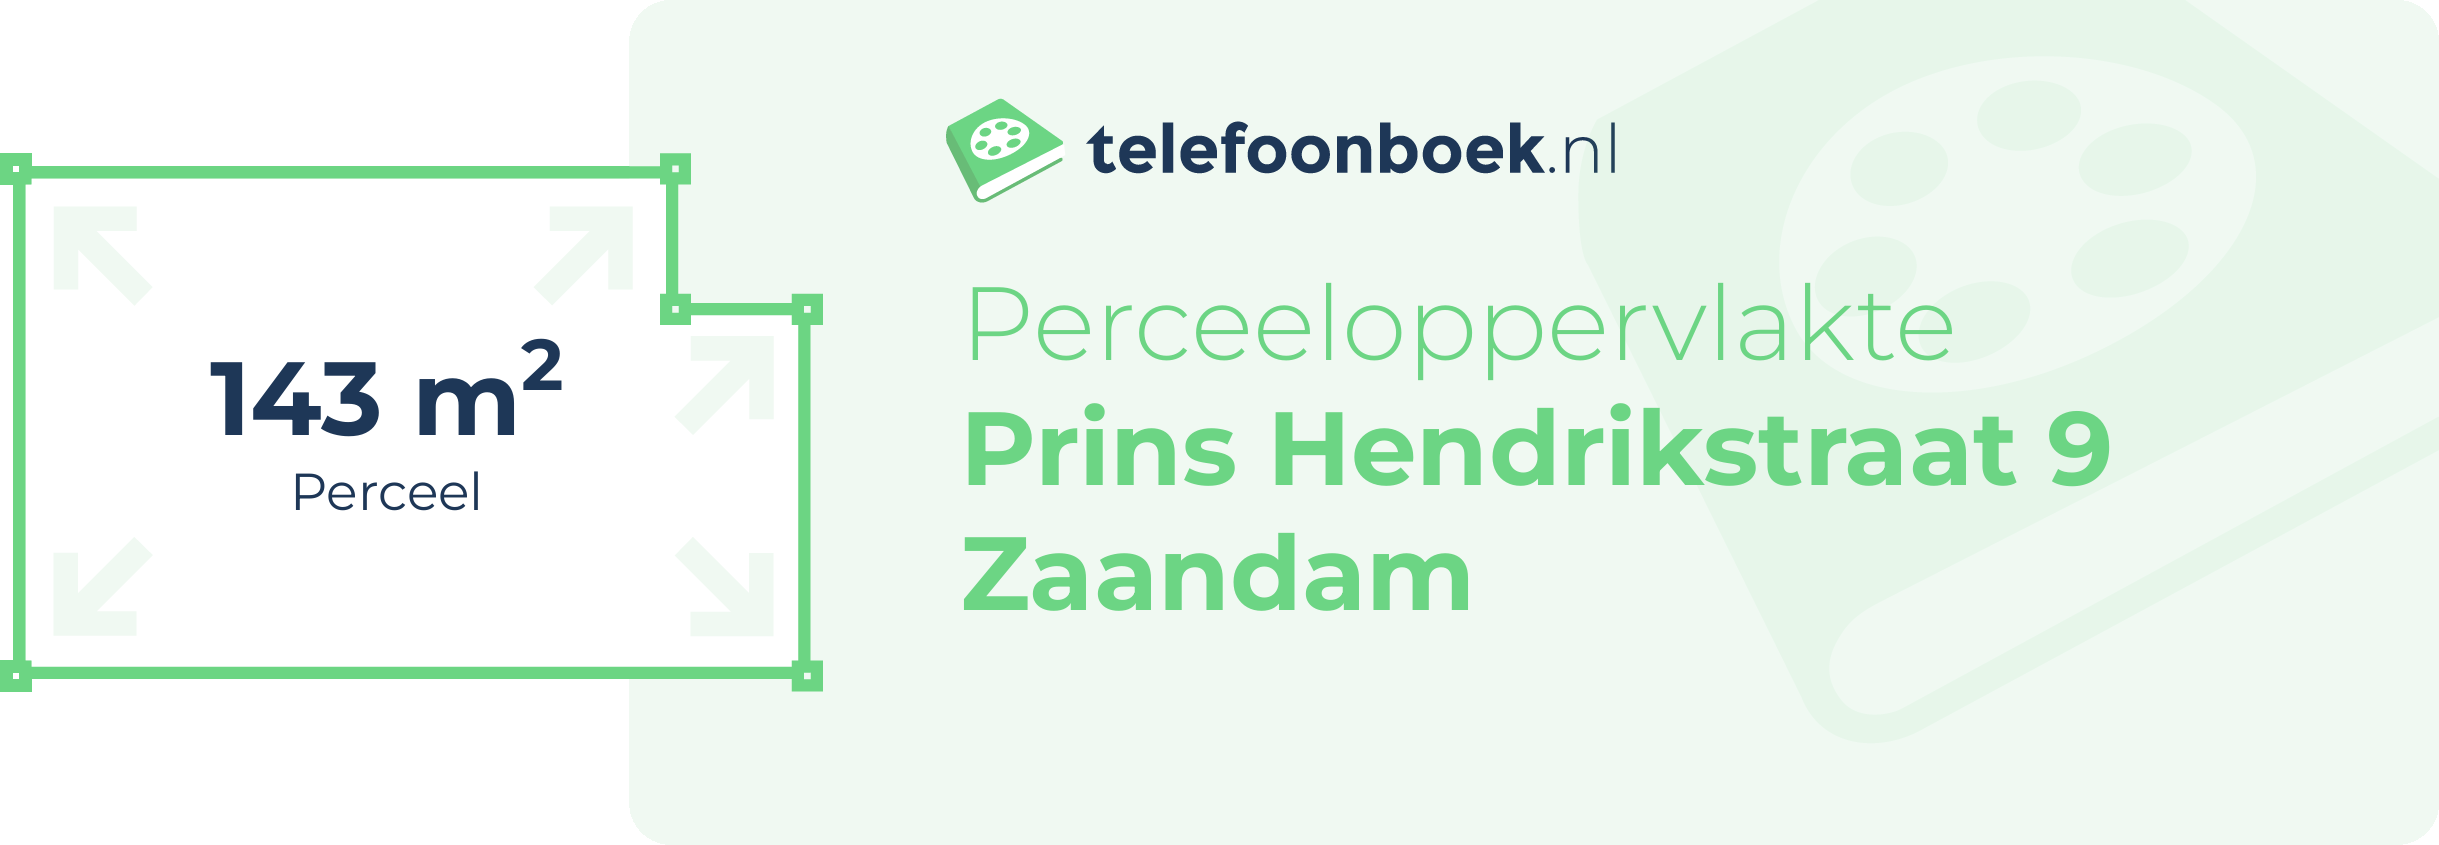 Perceeloppervlakte Prins Hendrikstraat 9 Zaandam